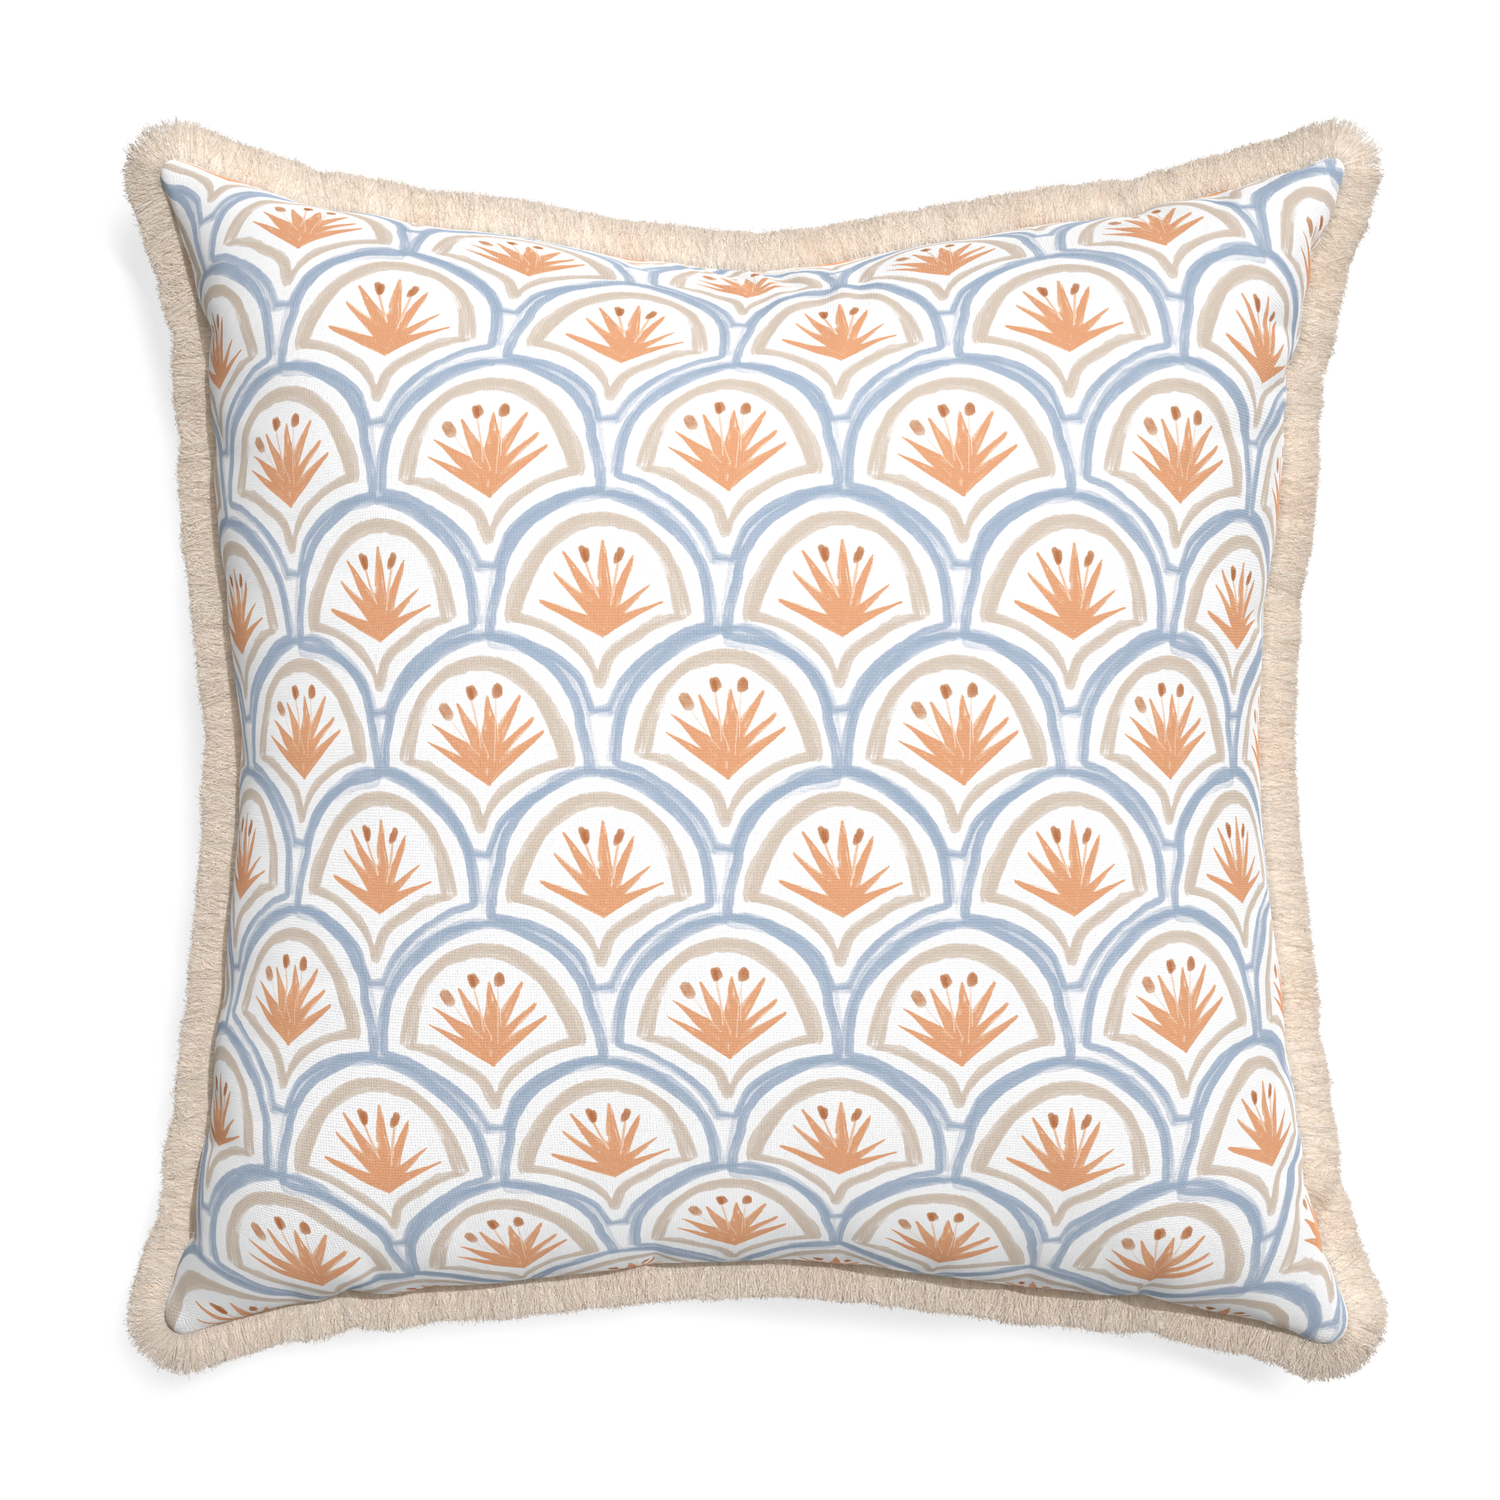 Euro-sham thatcher apricot custom art deco palm patternpillow with cream fringe on white background